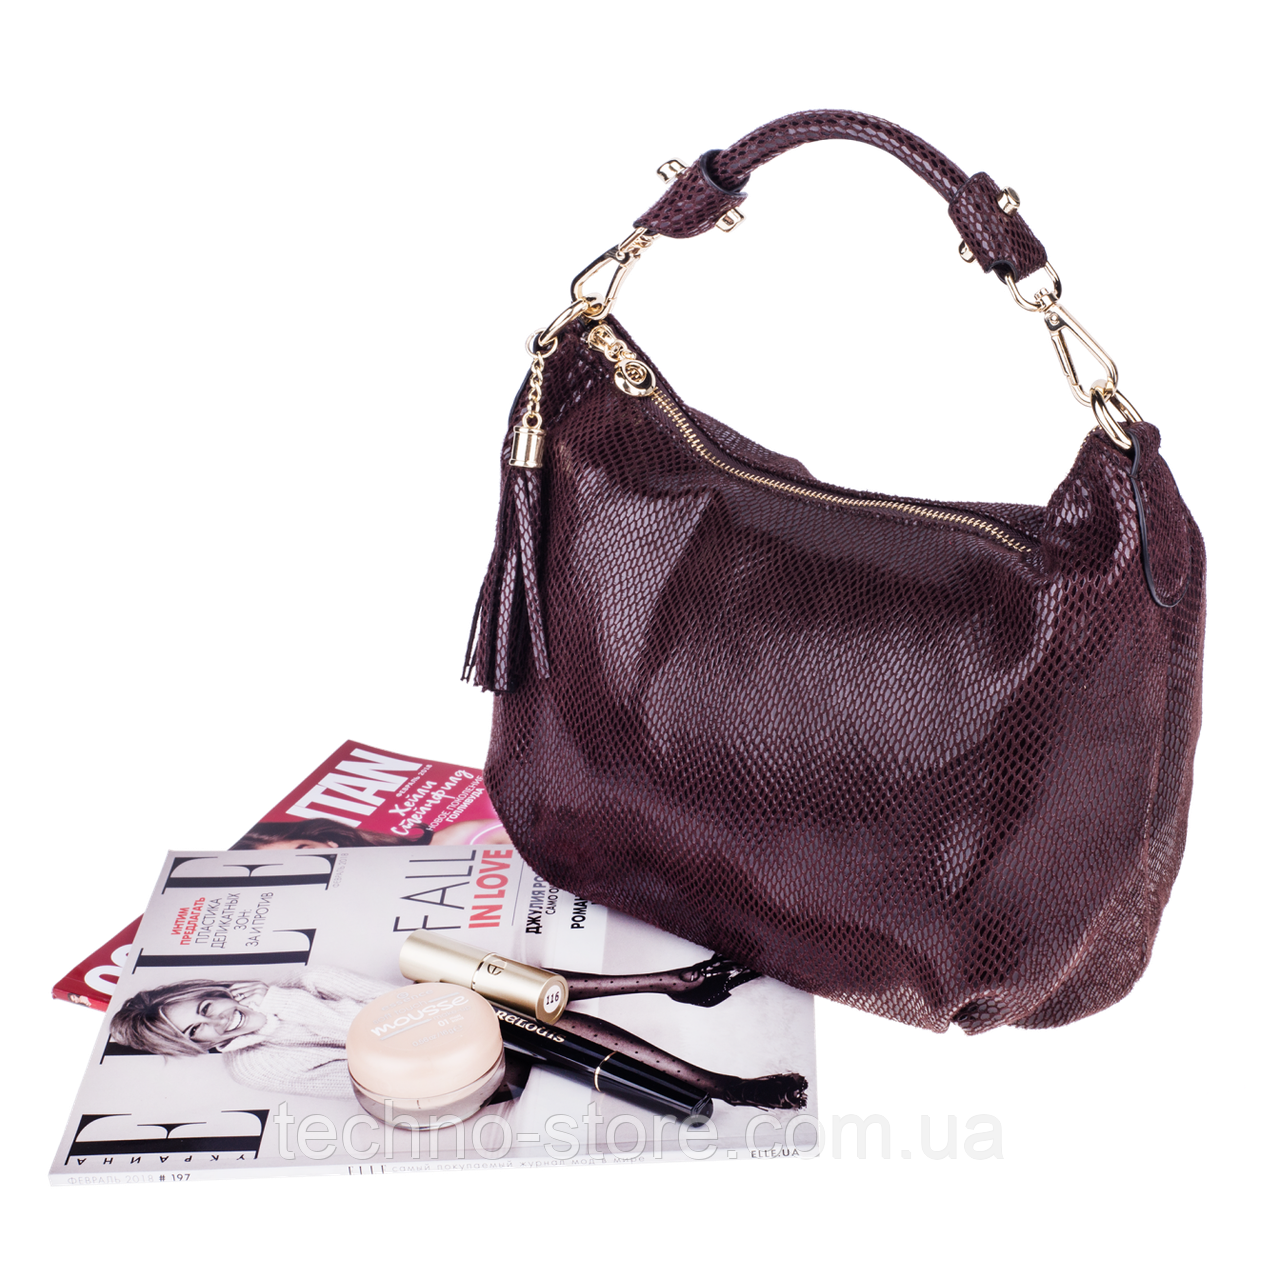 Жіноча сумка Realer P112 коричнева